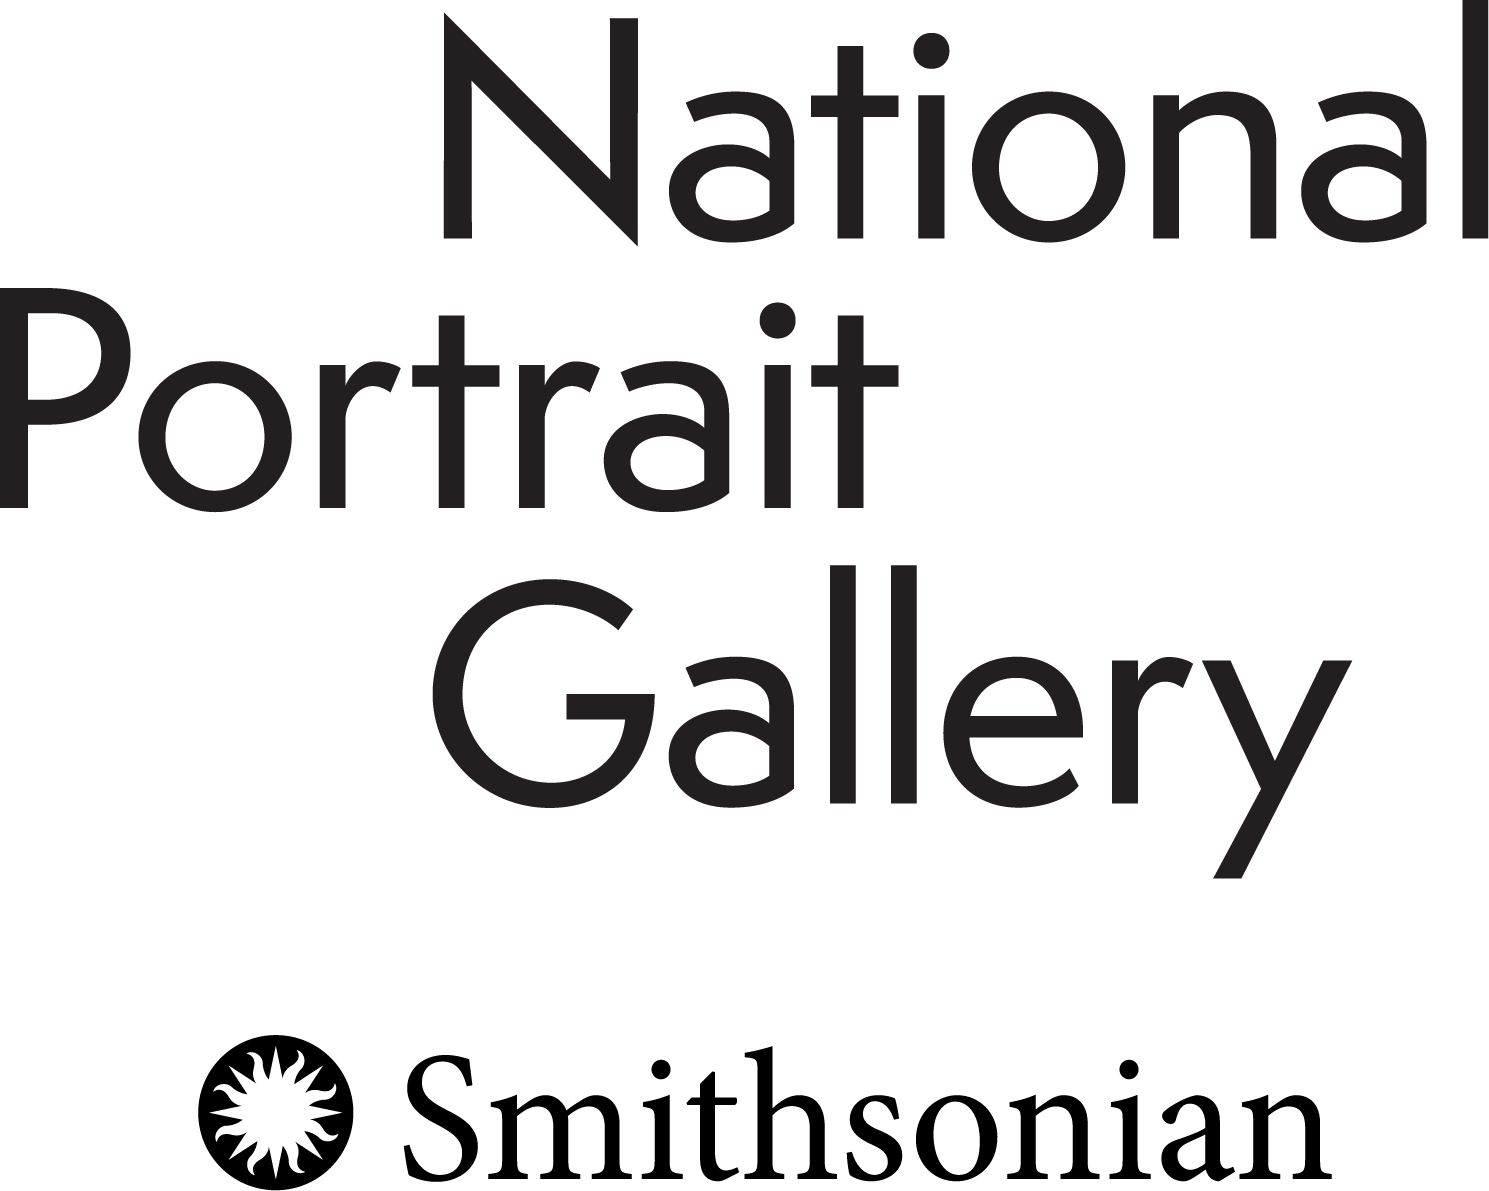 National Portrait Gallery logo